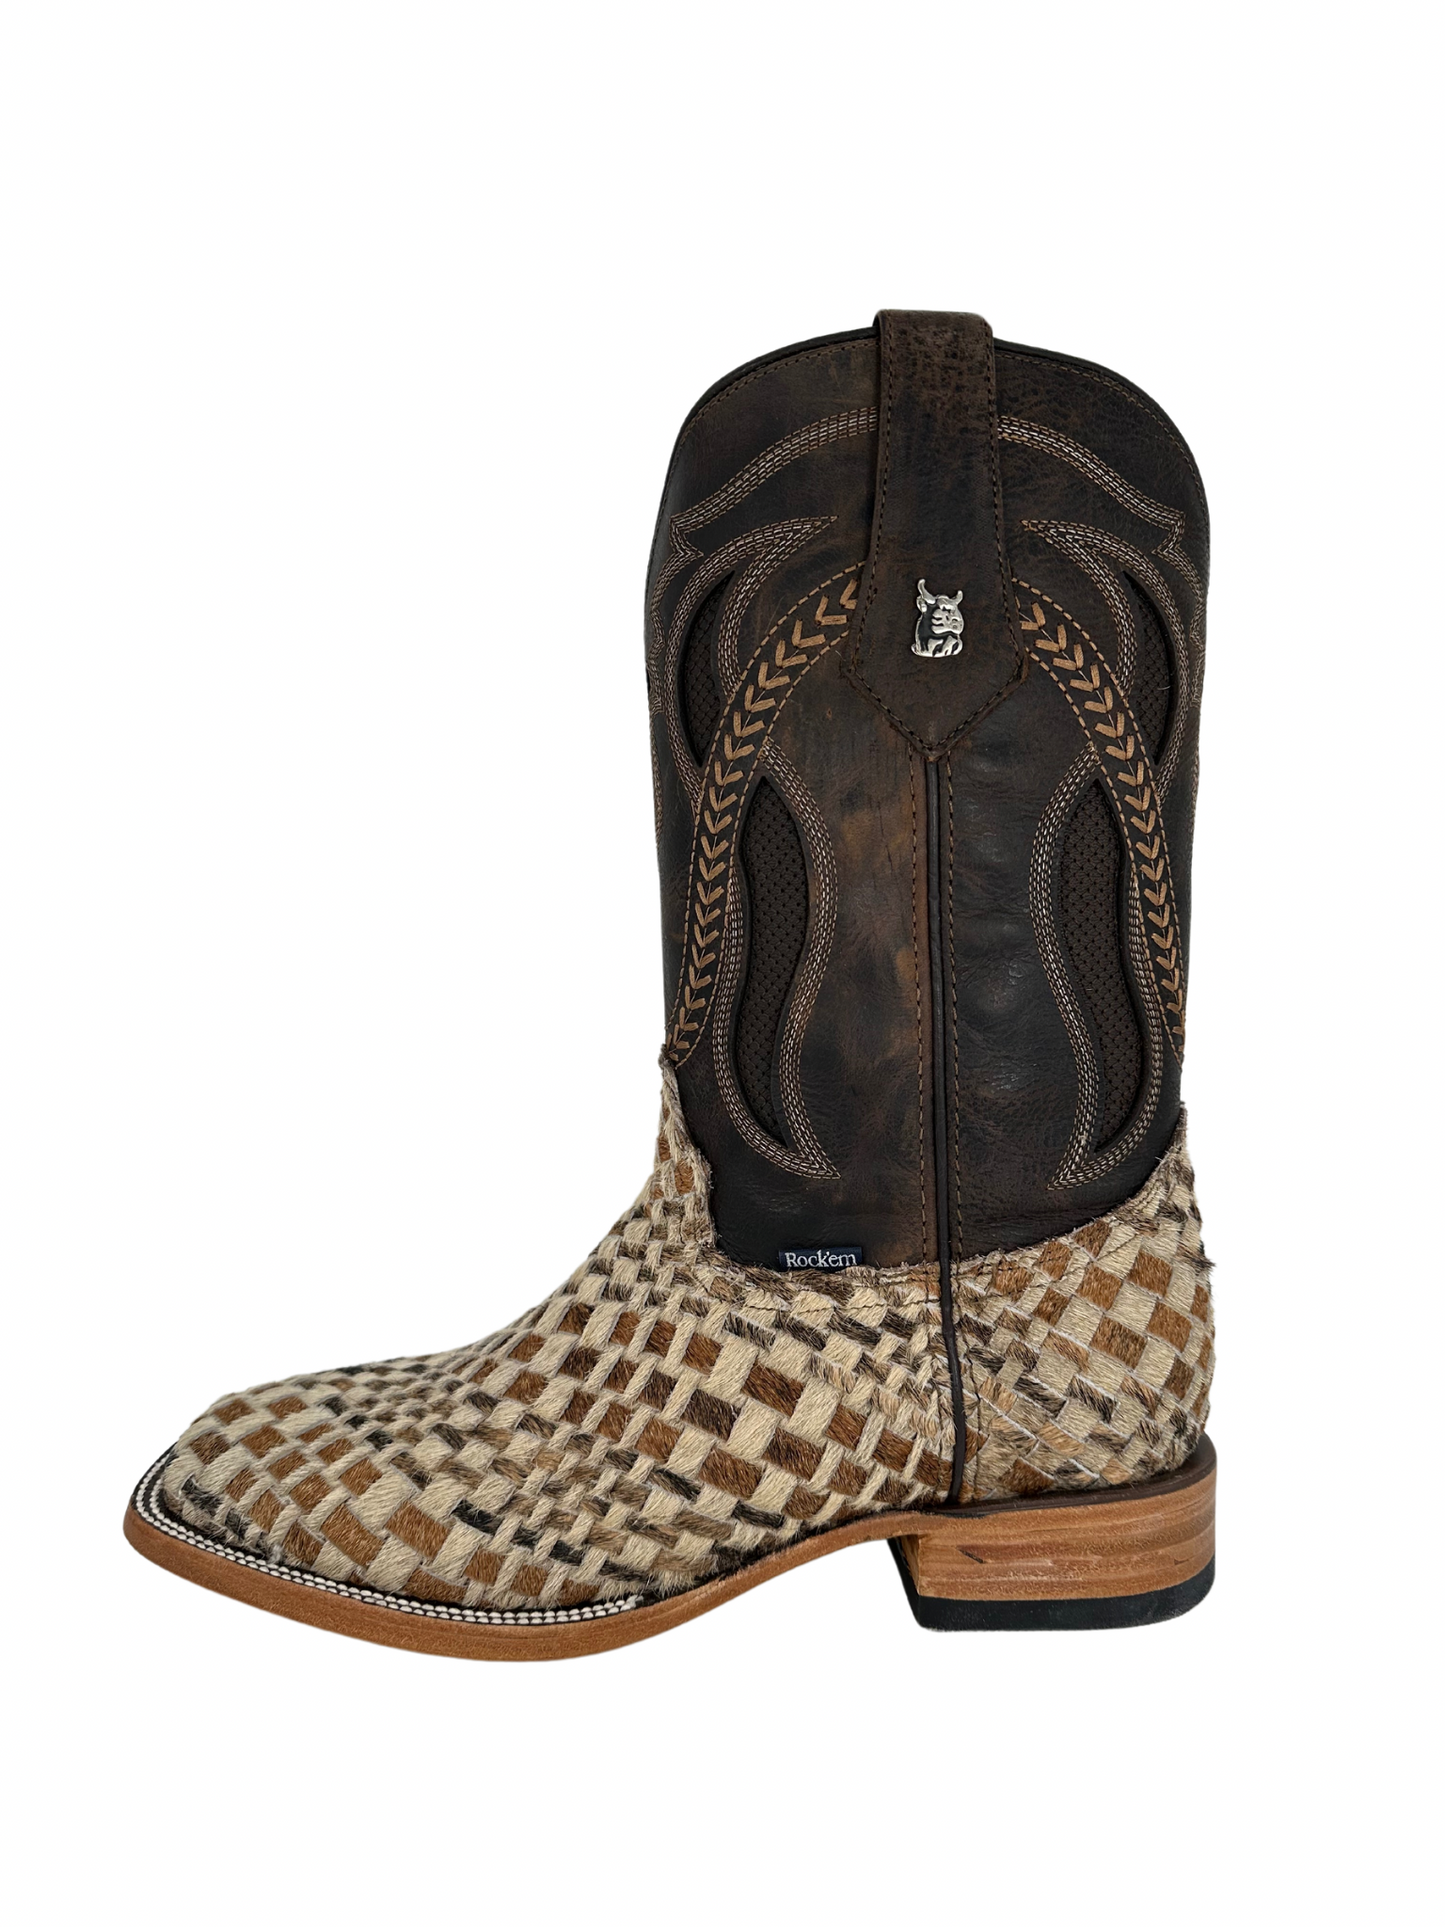 Rock'em Men's Petatillo Cow Hair Boots Size 9.5 *AS SEEN ON IMAGE*